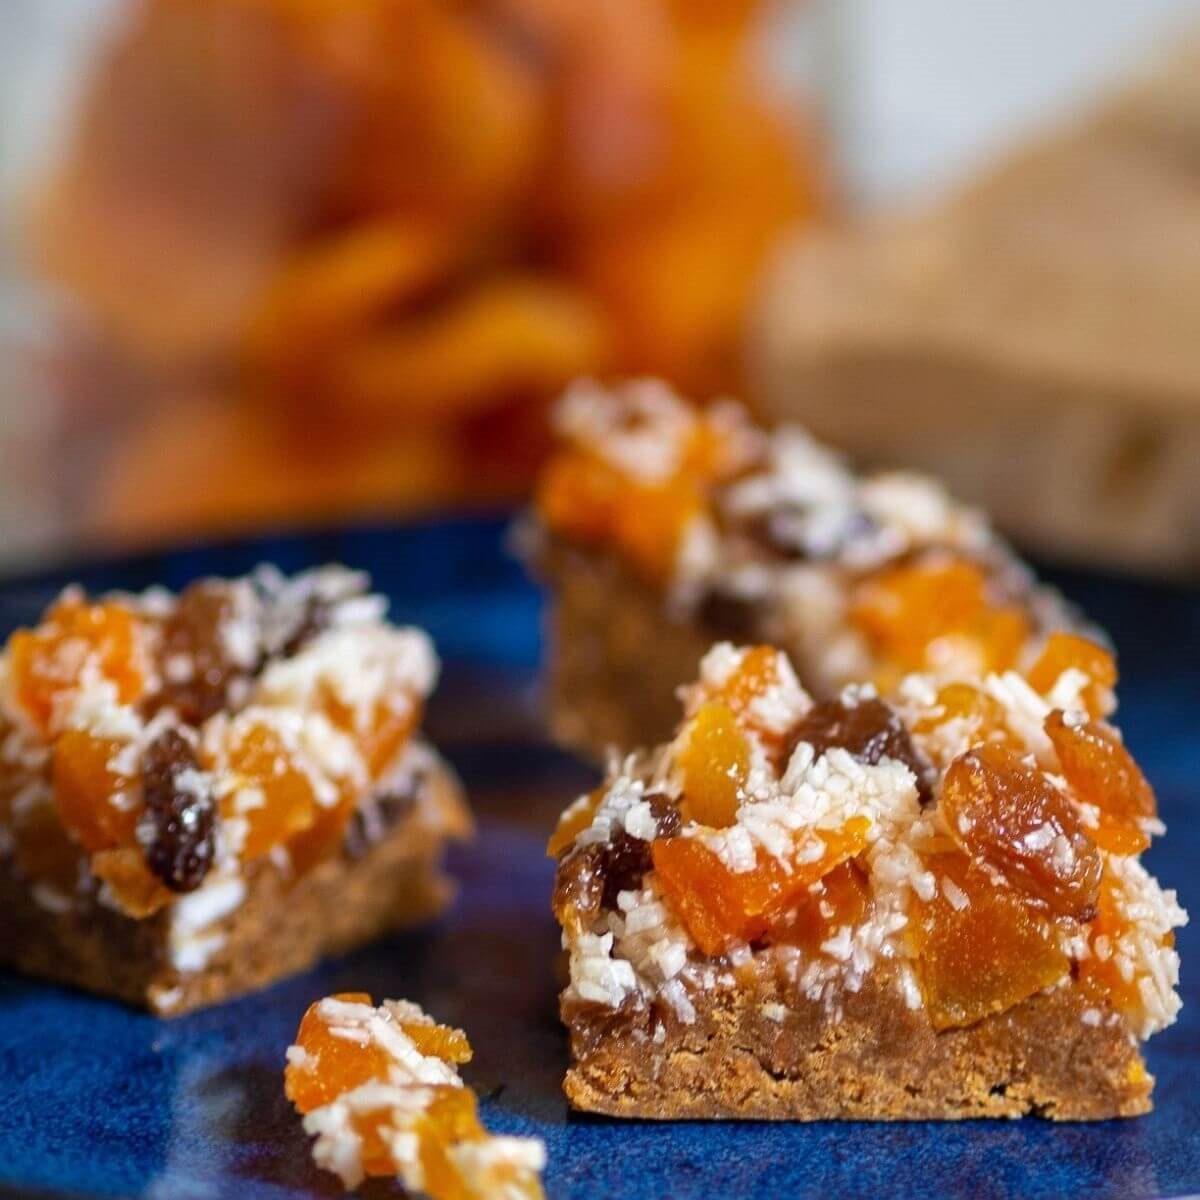 Premium Photo | Piece of apricot sponge cake on plate healthy nutrition  vegan dessert glutenoff sugar free